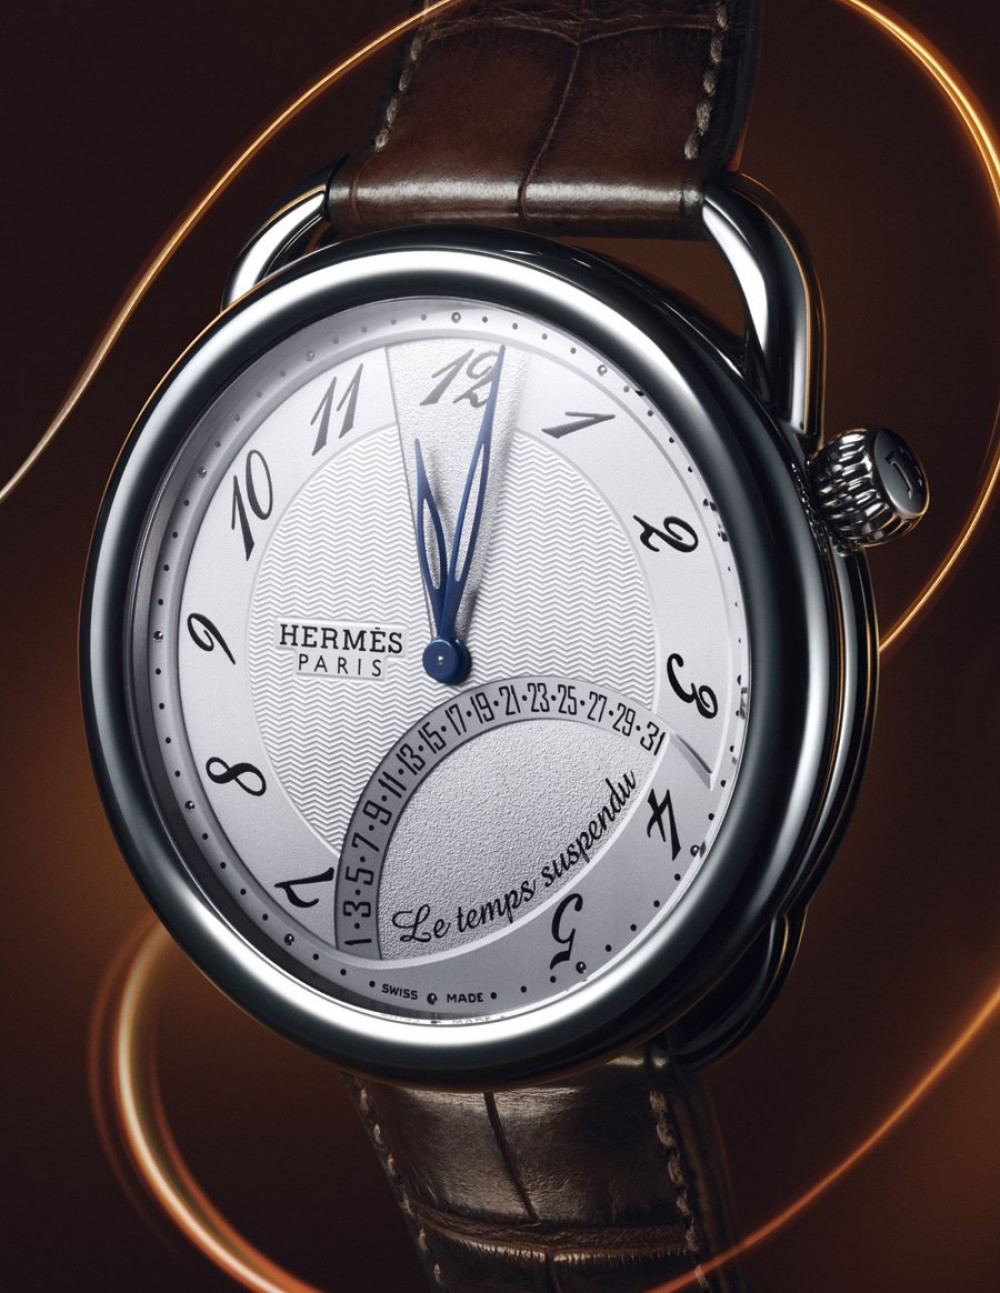 Zegarek firmy Hermès, model Arceau Les Temps Suspendu